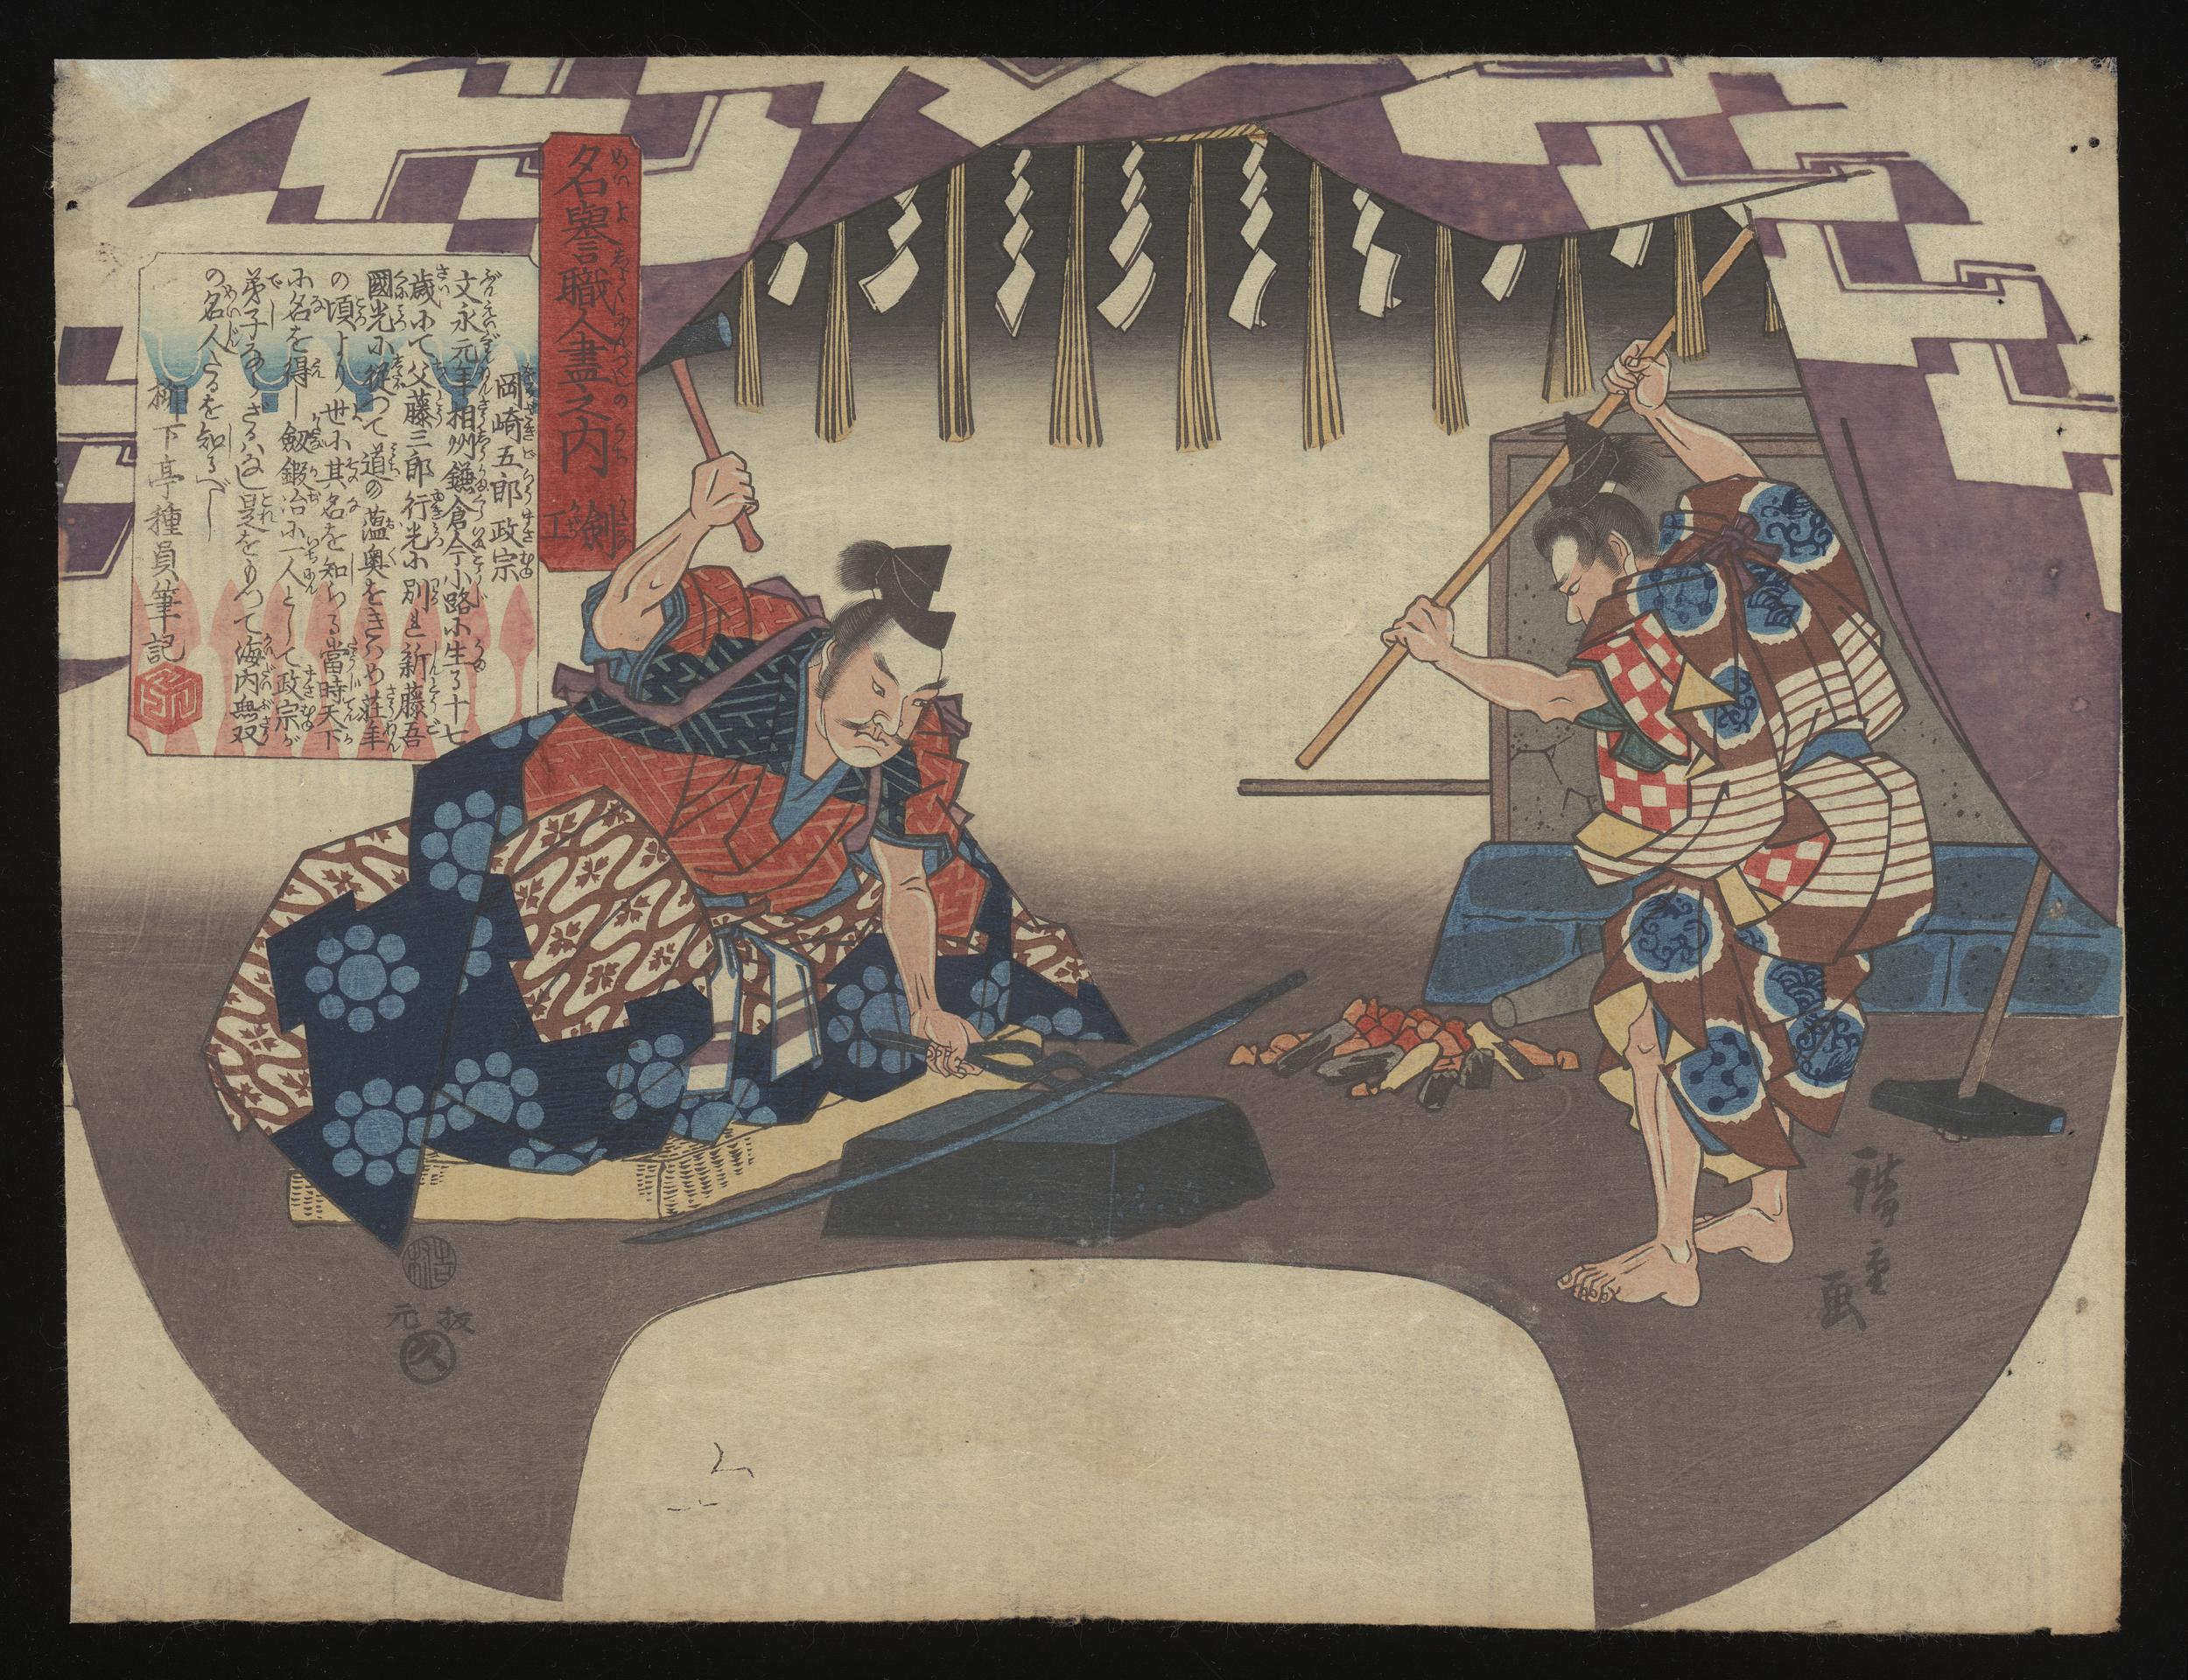 The Swordsmith Okazaki Goro Masamune by Utagawa, Hiroshige © Victoria and Albert Museum, London